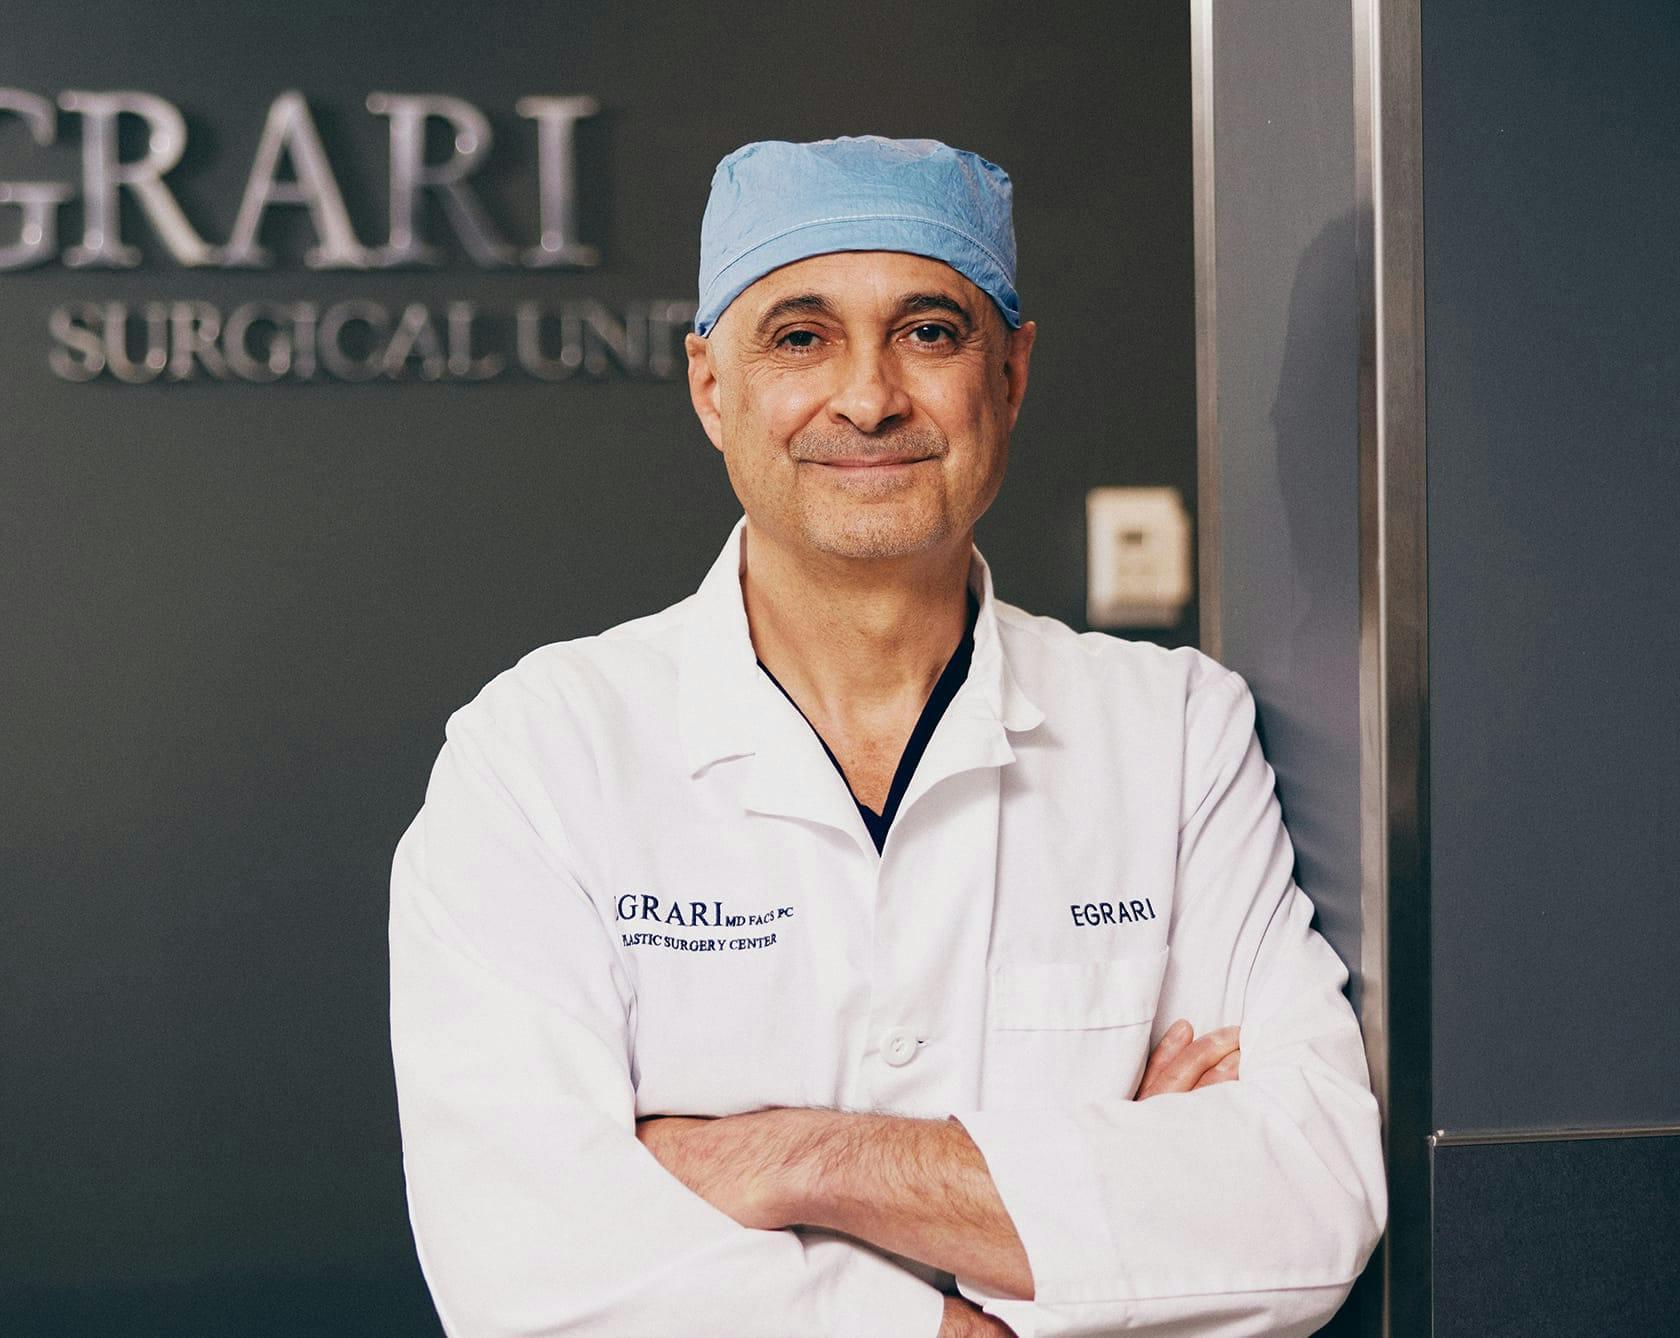 an image of Dr. Egrari in scrubs